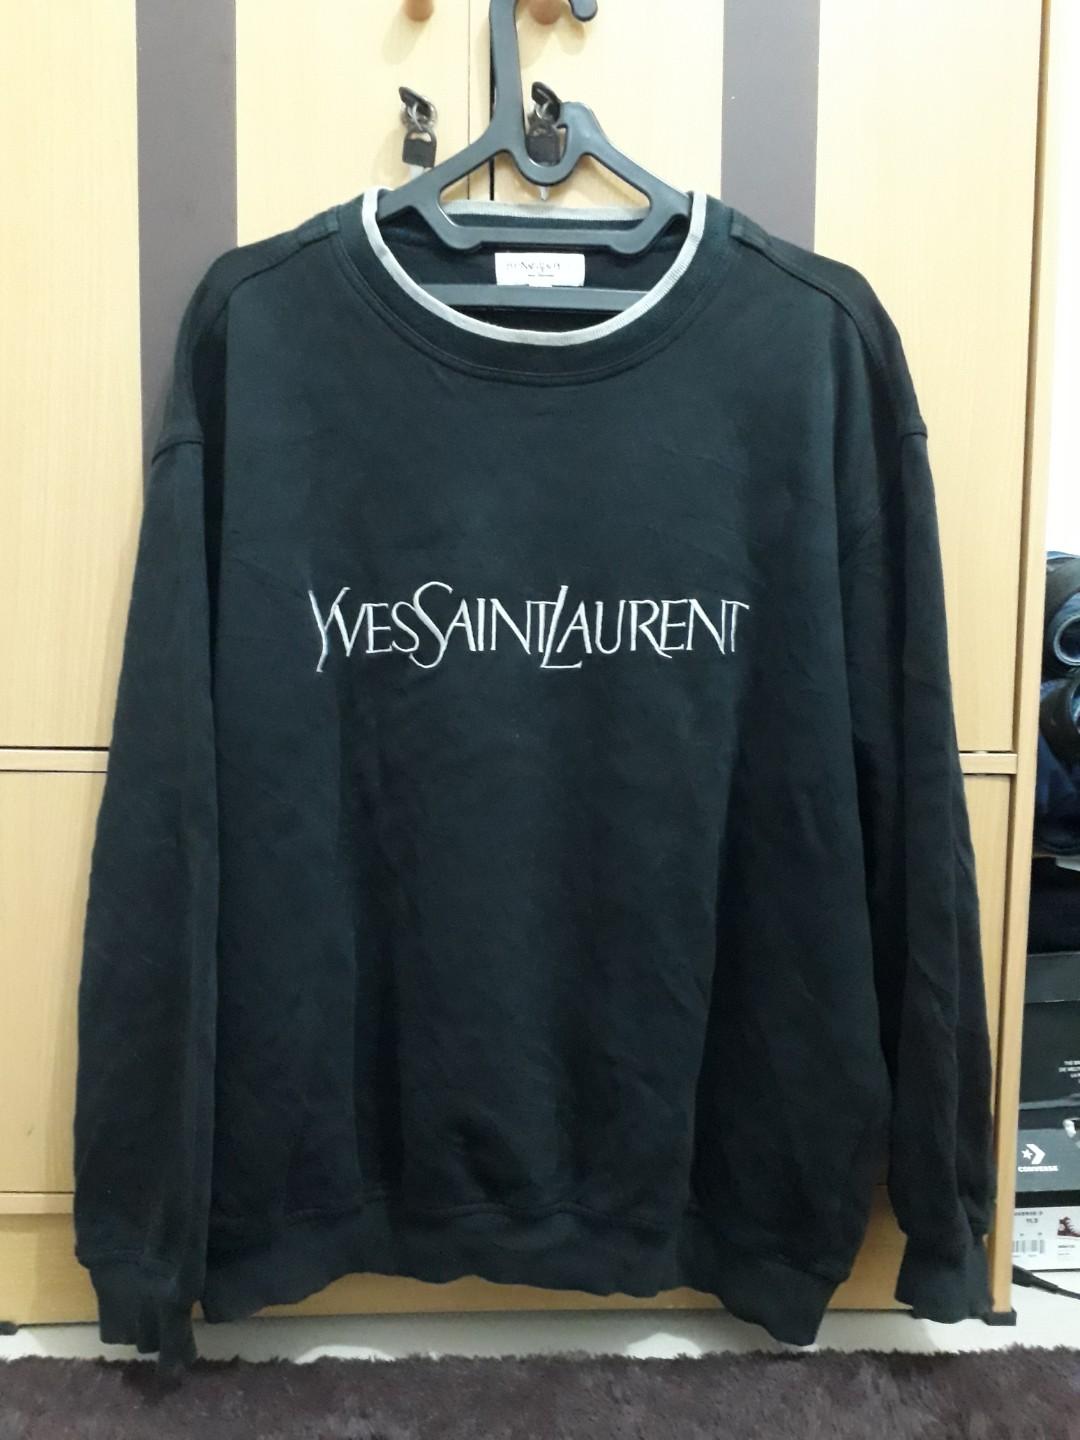 Yves Saint Laurent Vintage Sweatshirt Hotsell, 54% OFF | www 